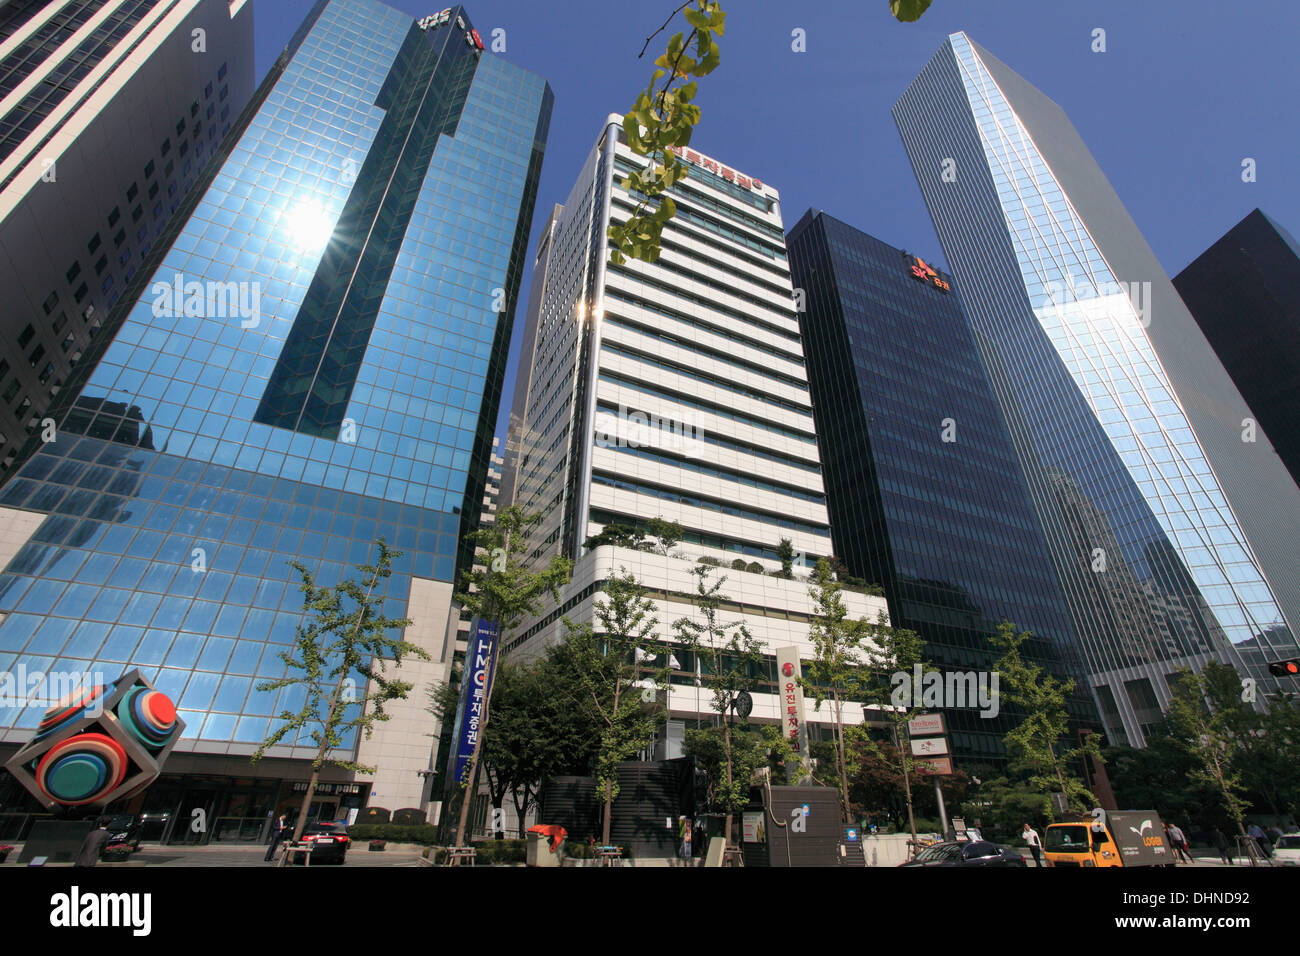 South Korea, Seoul, Yeouido, skyscrapers, Stock Photo